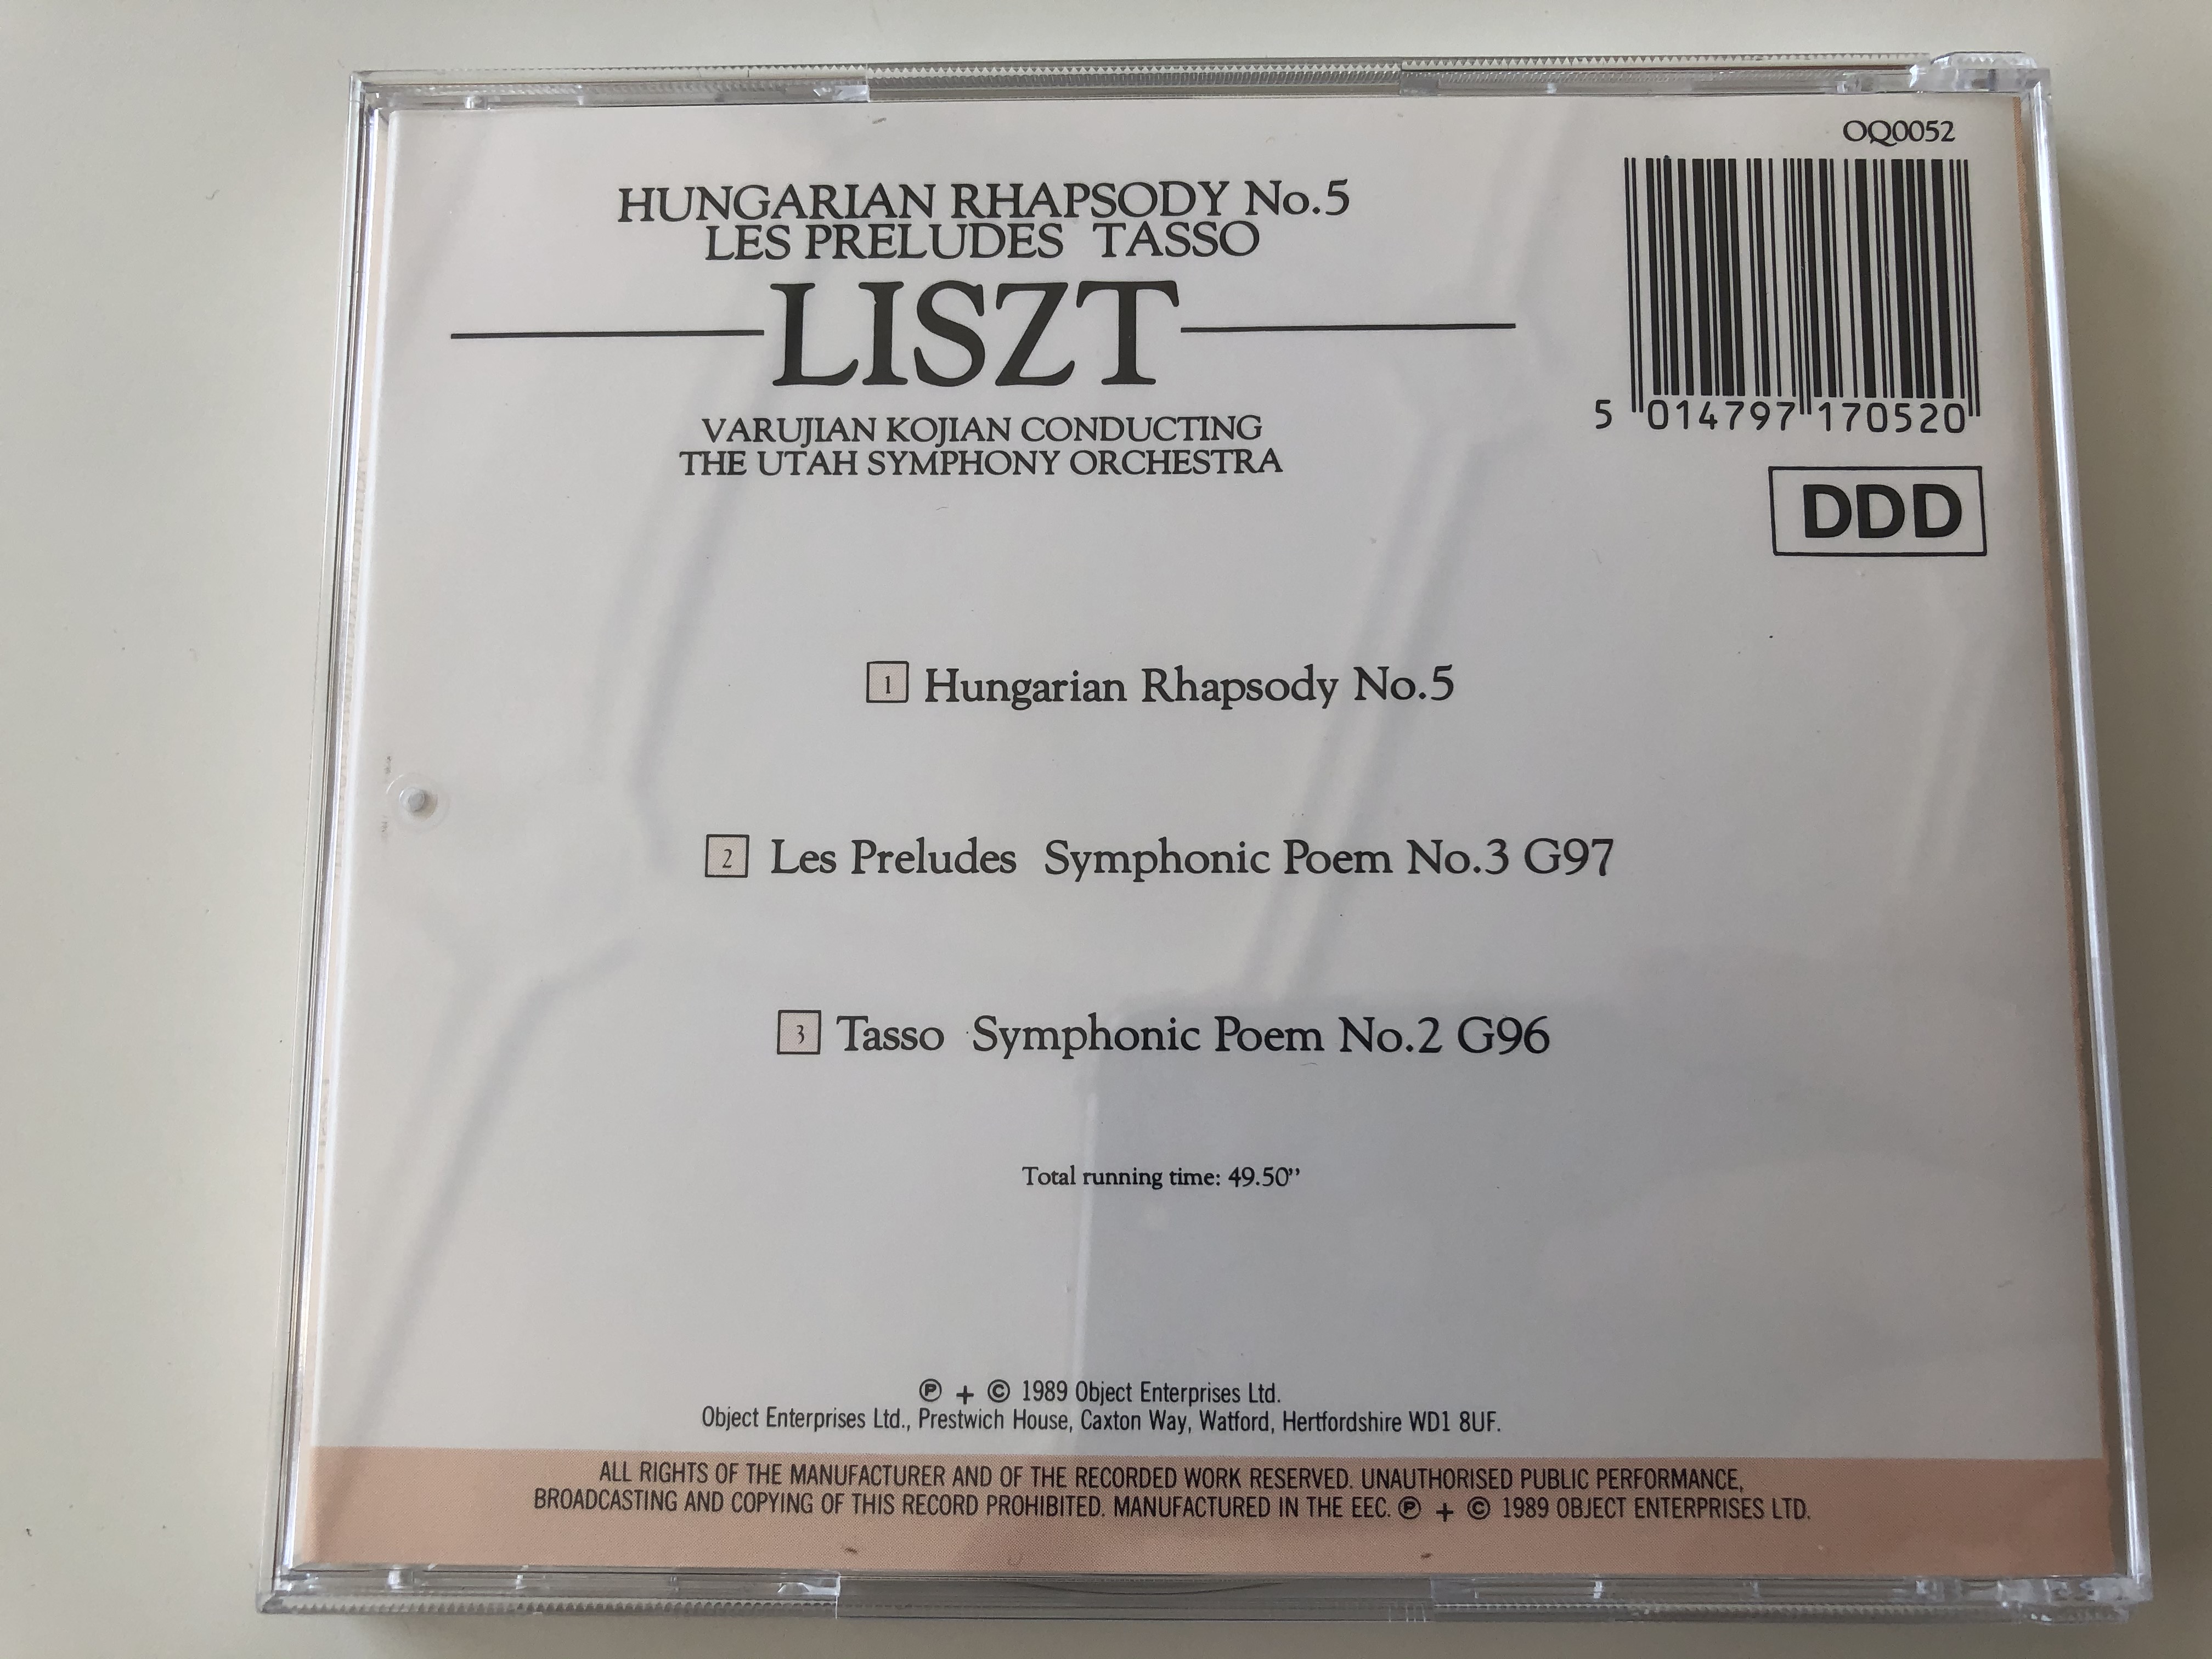 hungarian-rhapsody-no.-5-les-preludes-tasso-liszt-varujian-kojian-conducting-the-utah-symphony-orchestra-object-enterprises-ltd.-audio-cd-1989-oq0052-5-.jpg